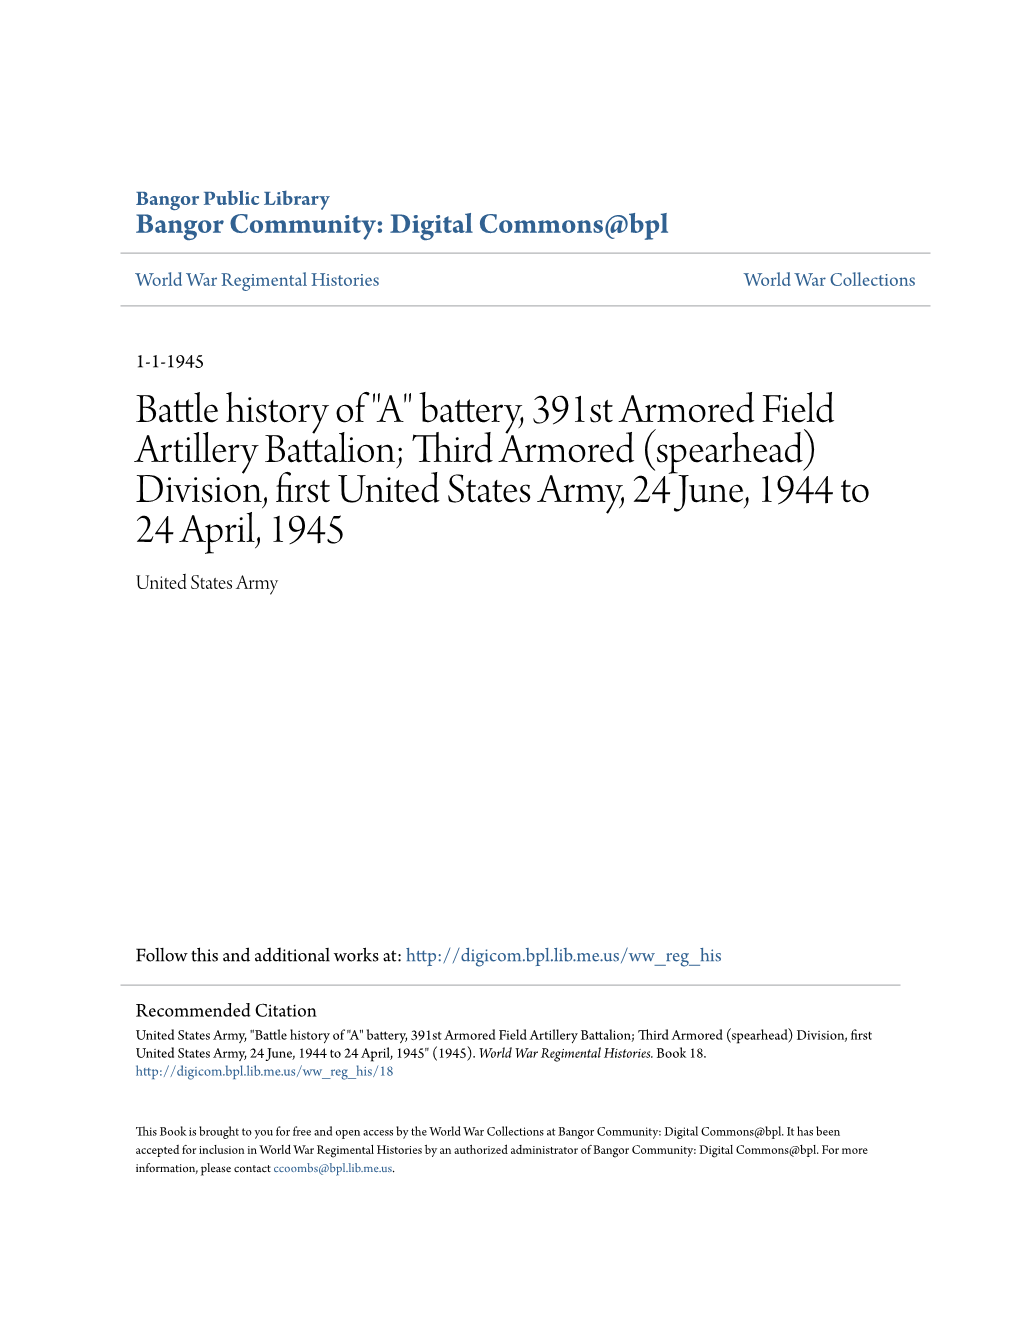 Battle History of "A" Battery, 391St Armored Field Artillery Battalion